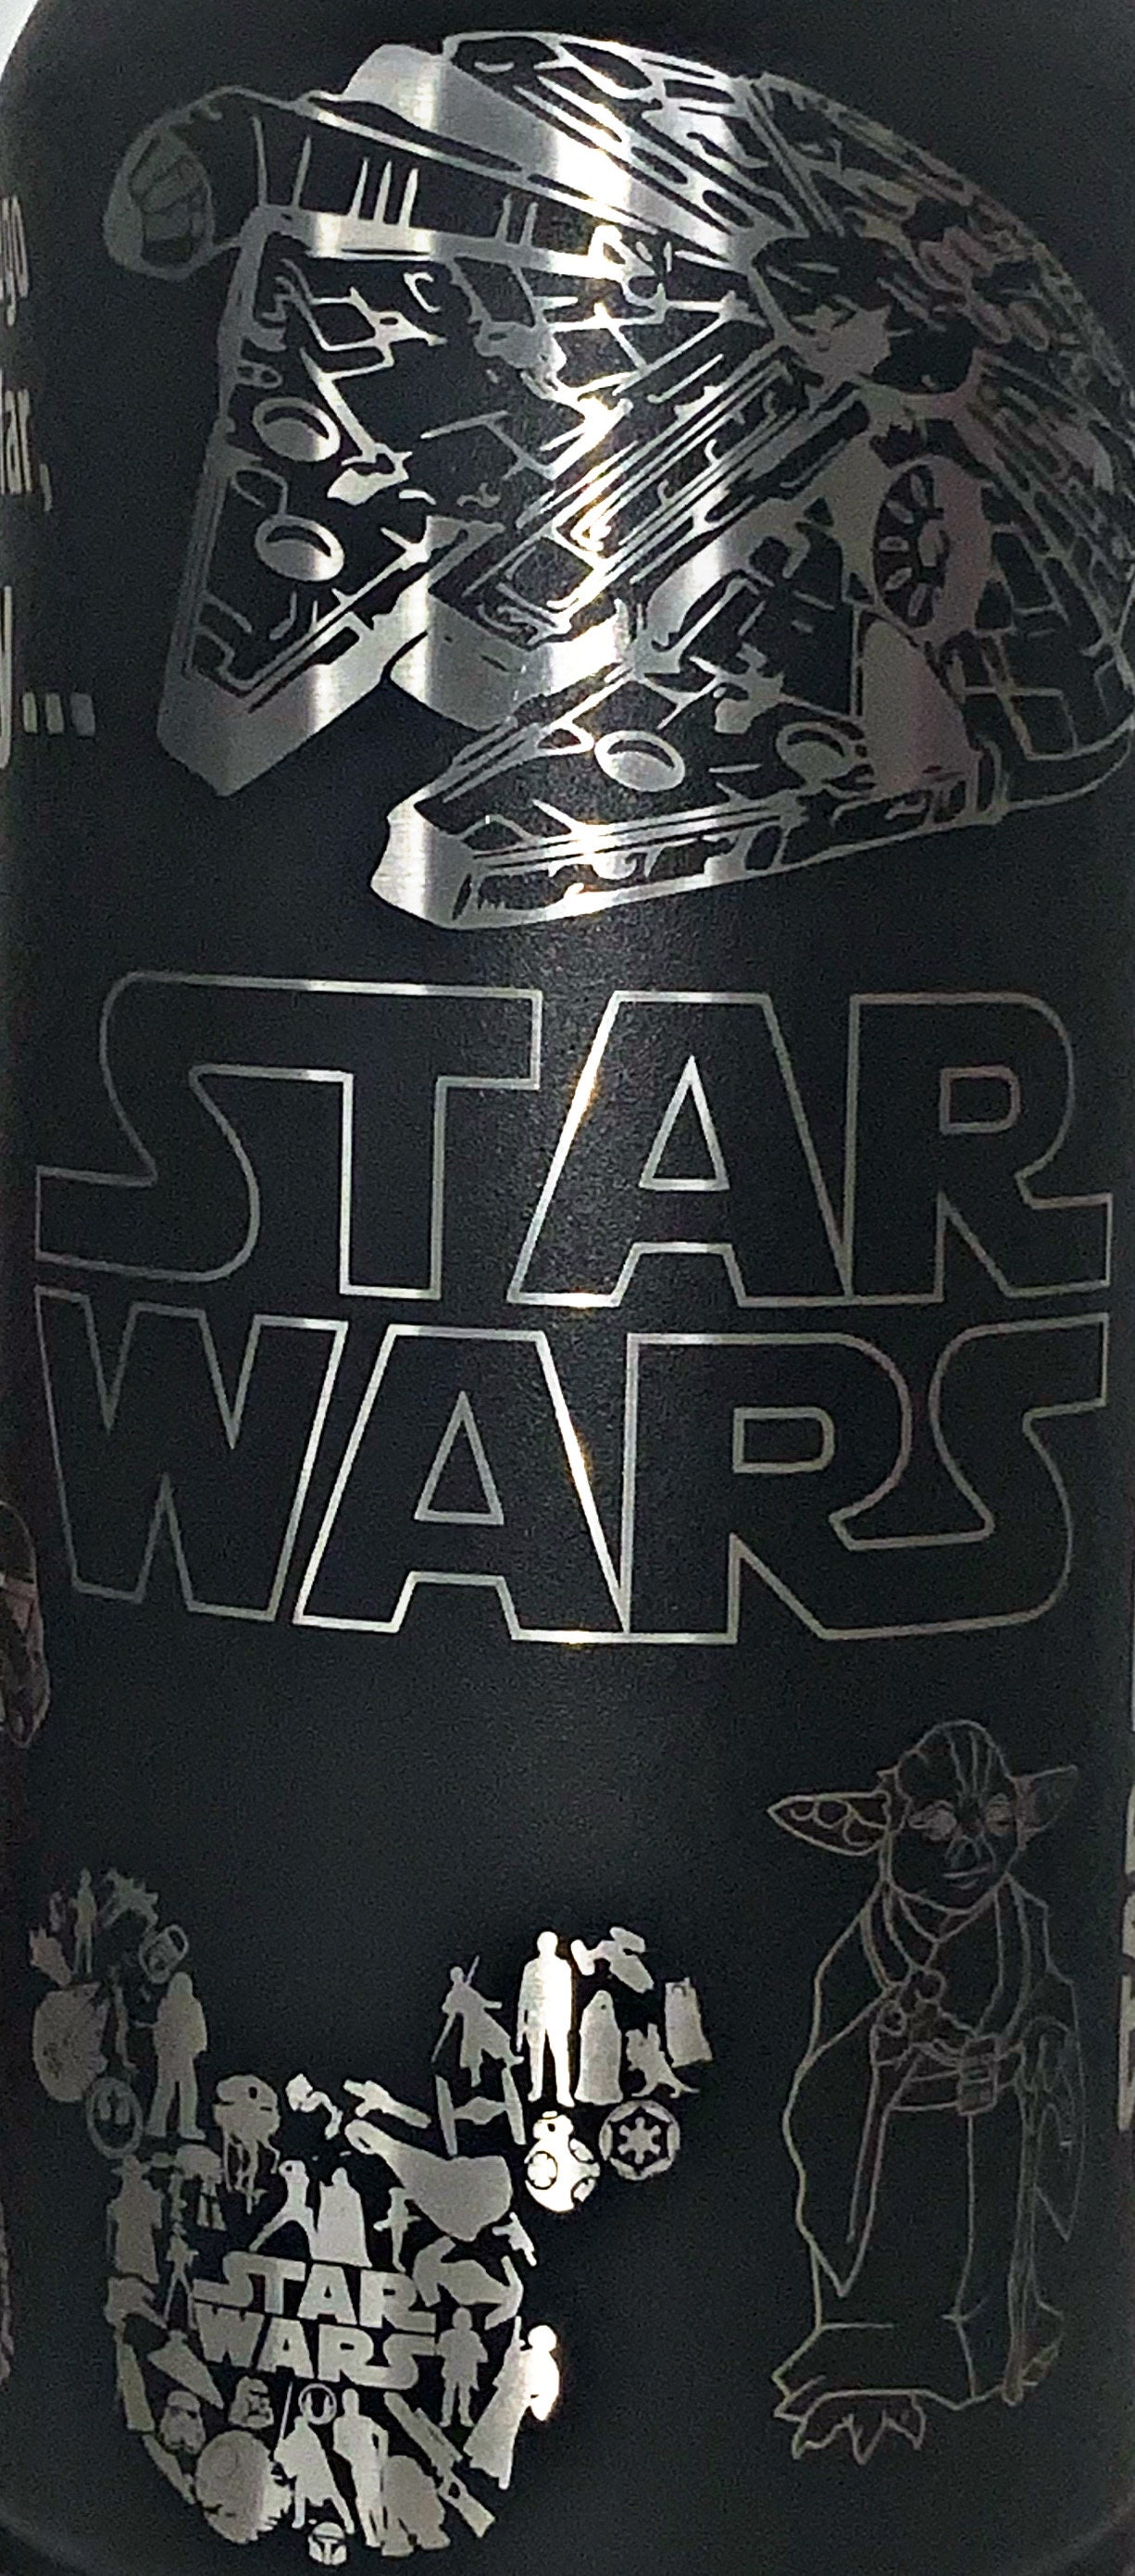 Star Wars Custom 20 Oz. 32 Oz. or 40 Oz. Water Bottle 